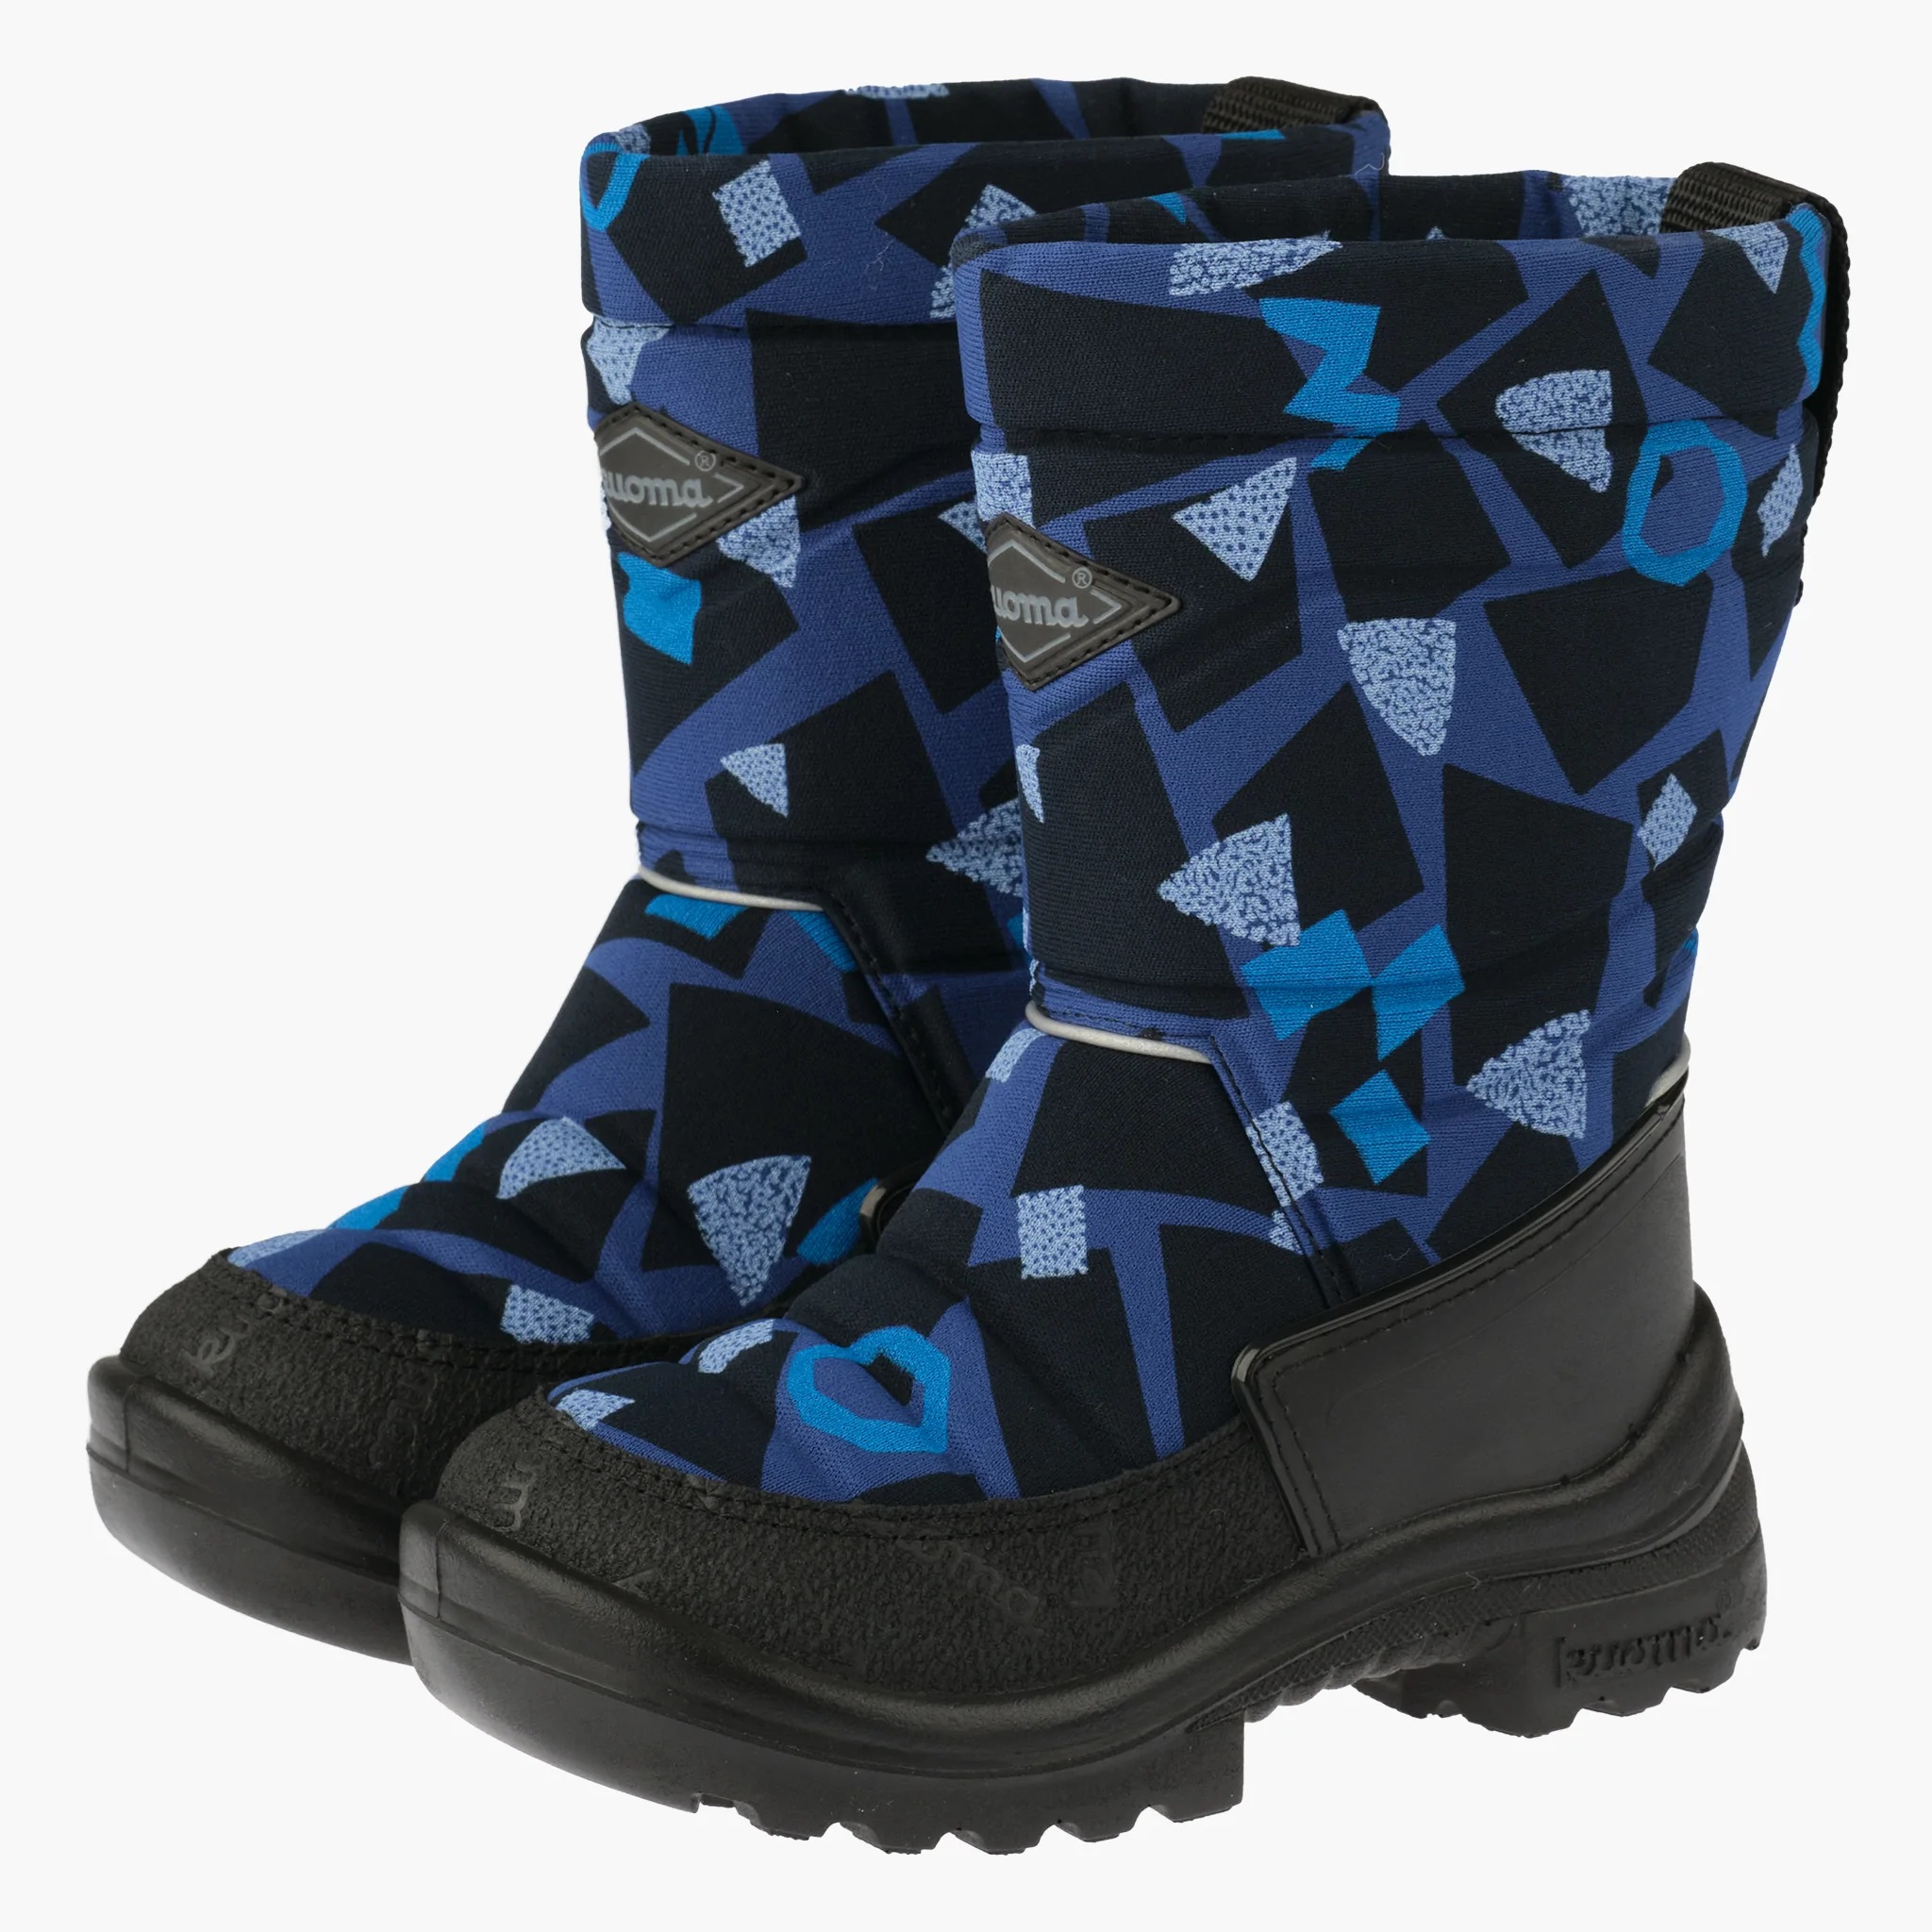 Kuoma Putkivarsi Children's Winter Boots Navy Blue size 30